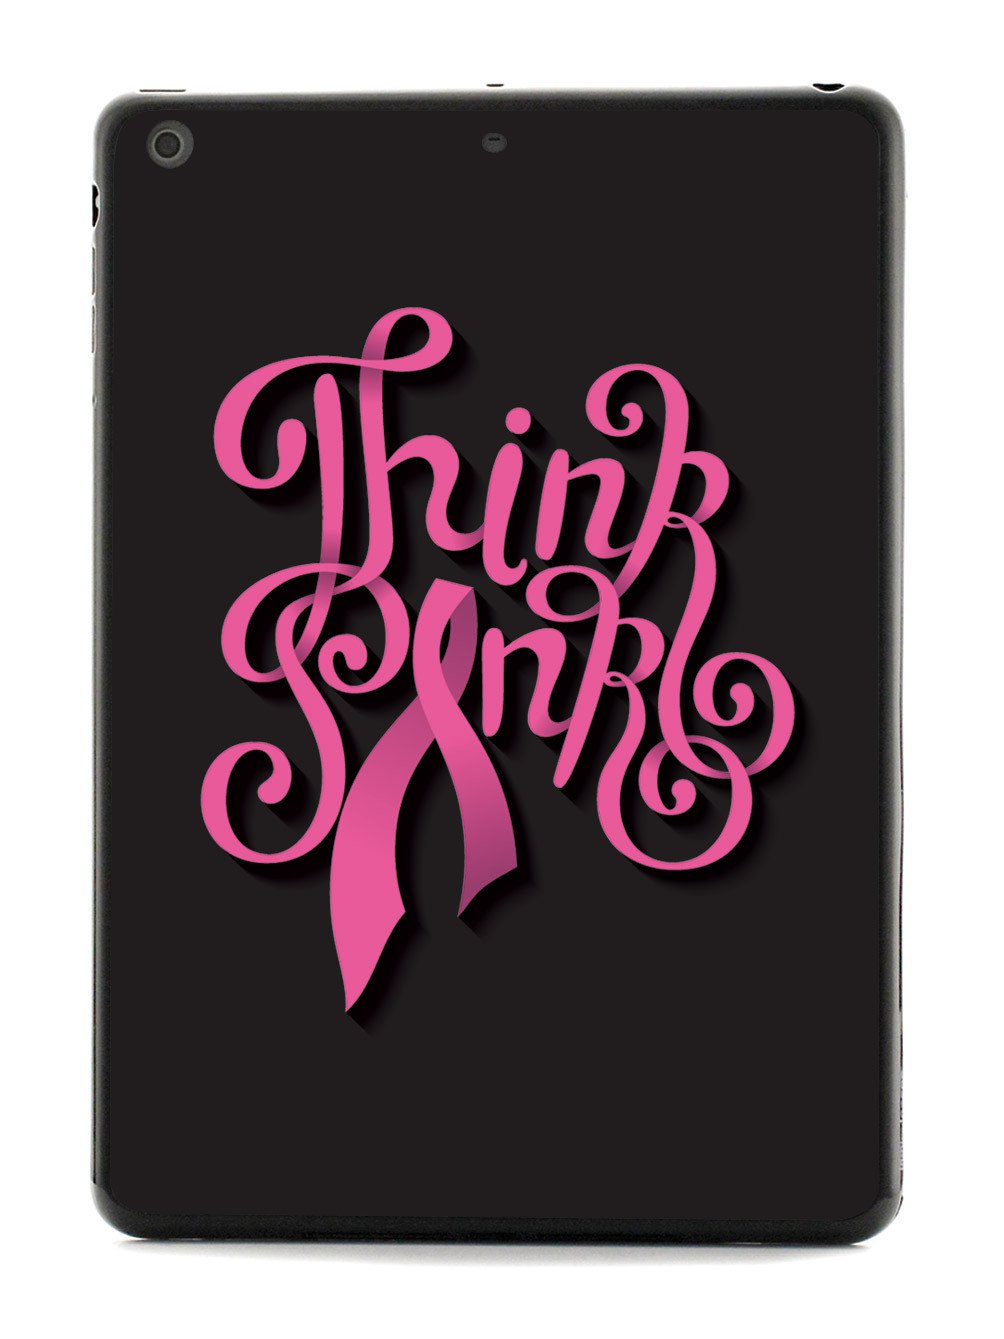 Think Pink - Ribbon Swirls - Black Case